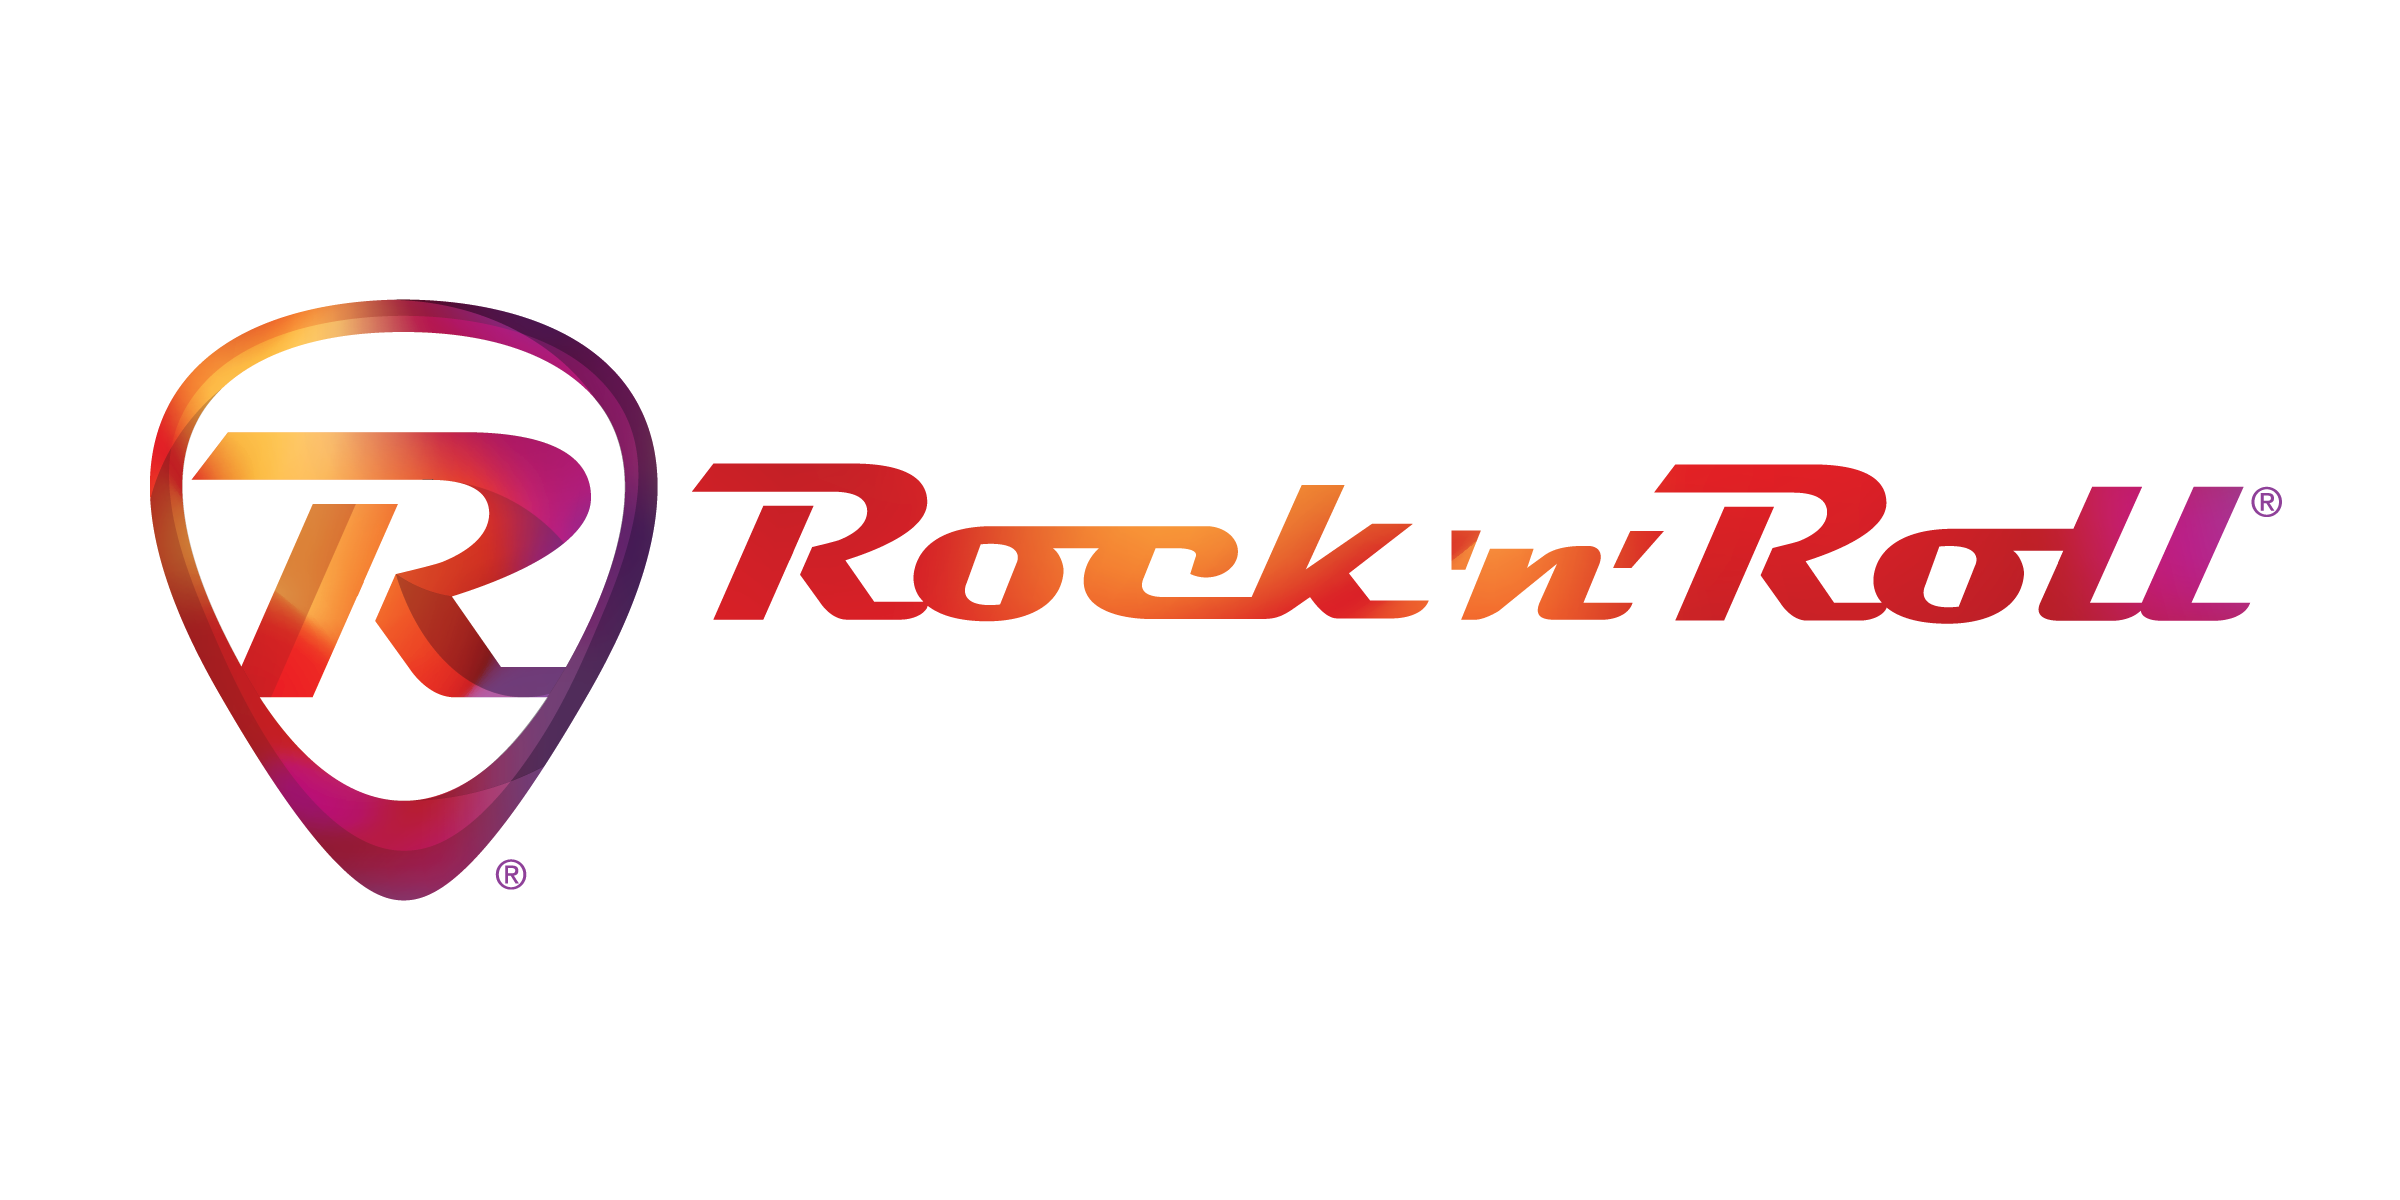 Rock n roll running series